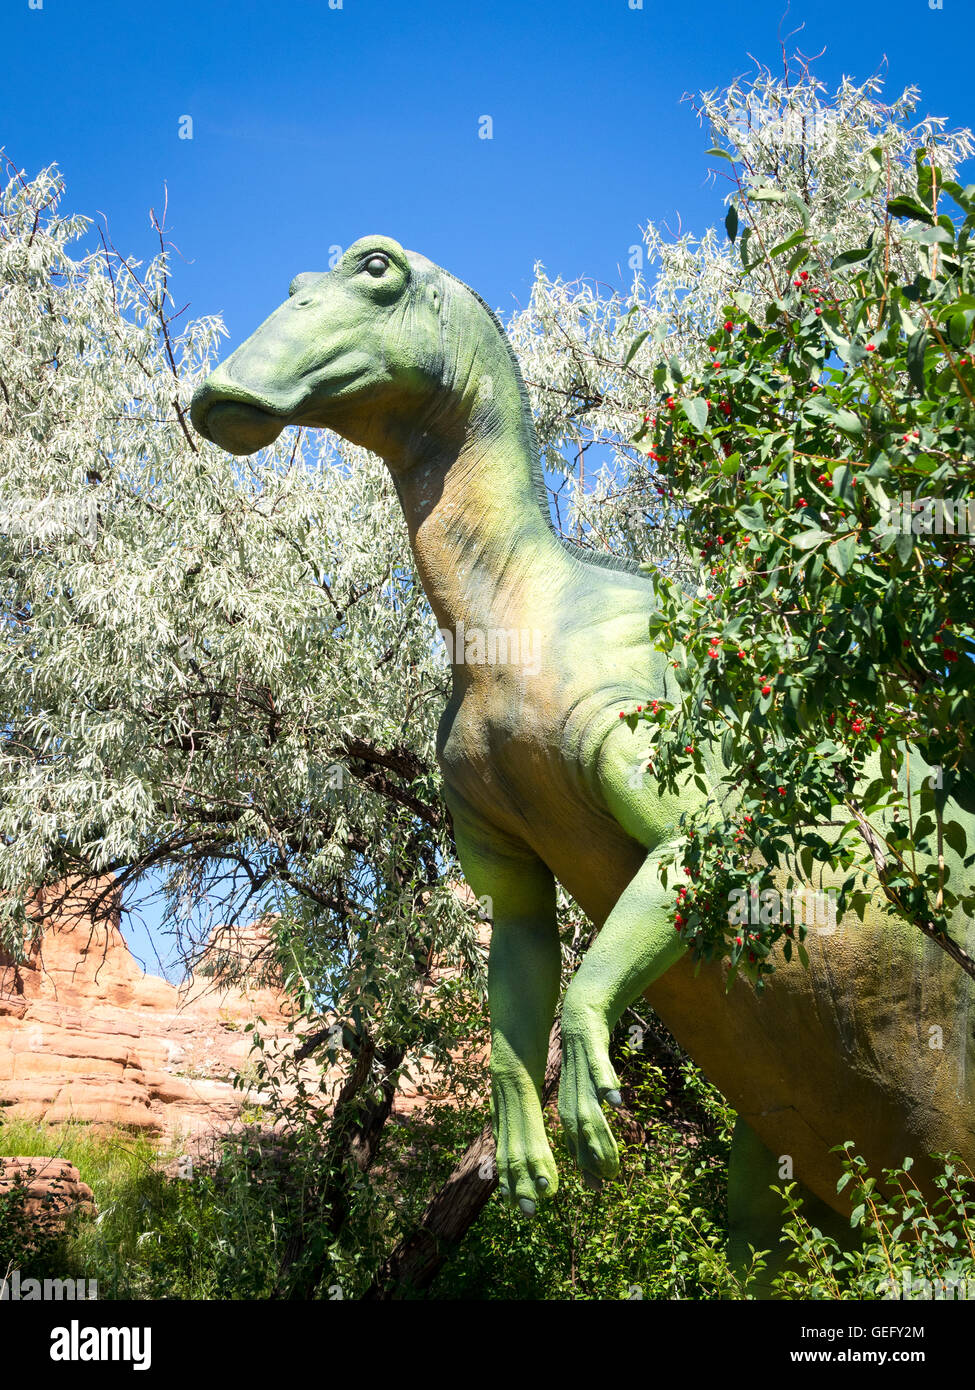 A model replica of an Edmontosaurus, a genus of hadrosaurid (duck-billed) dinosaur. Calgary Zoo, Calgary, Alberta, Canada. Stock Photo